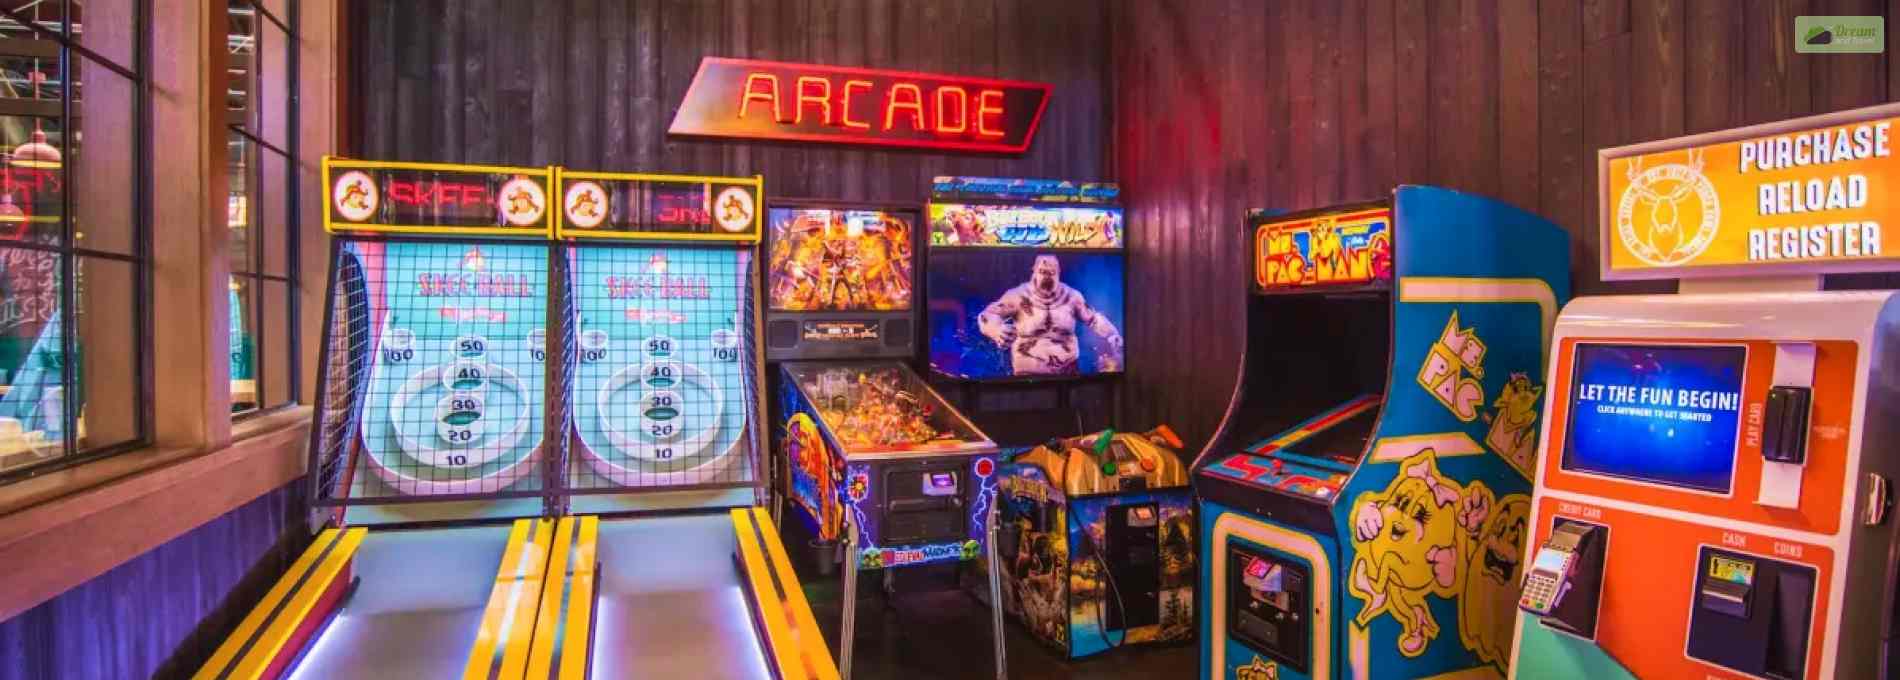 Adult video arcades